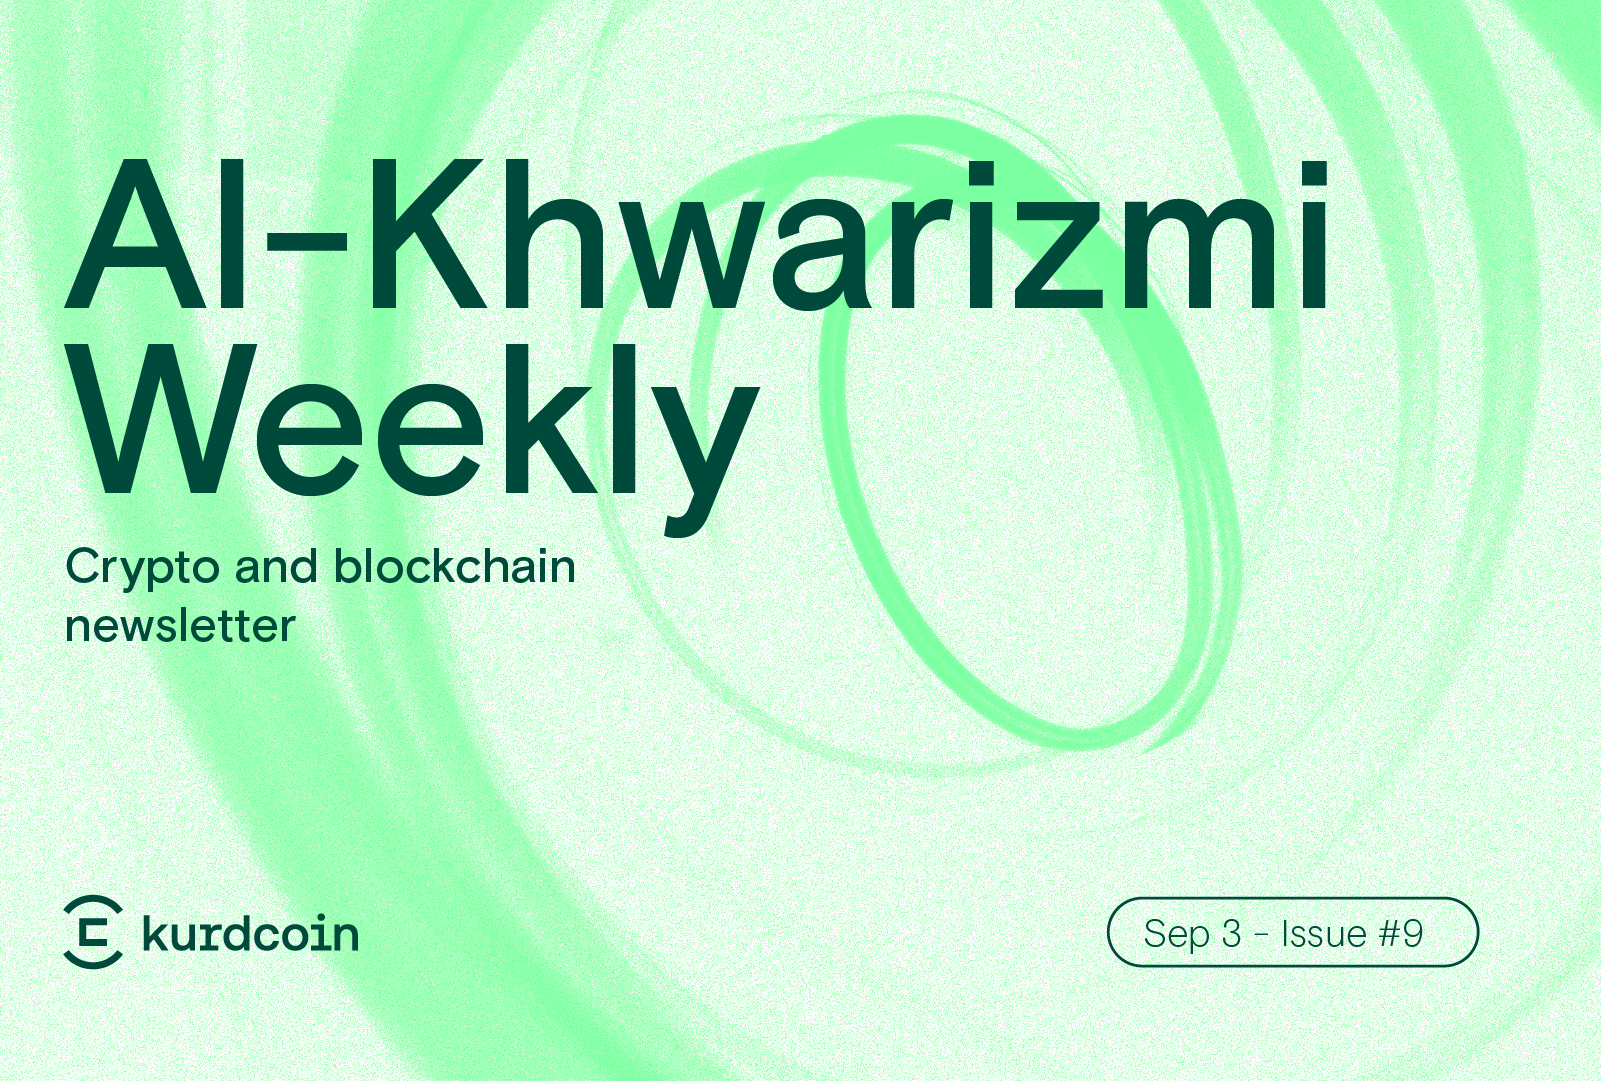 Cover of Kurdcoin's weekly crypto newsletter, Al-Khwarizmi Newsletter